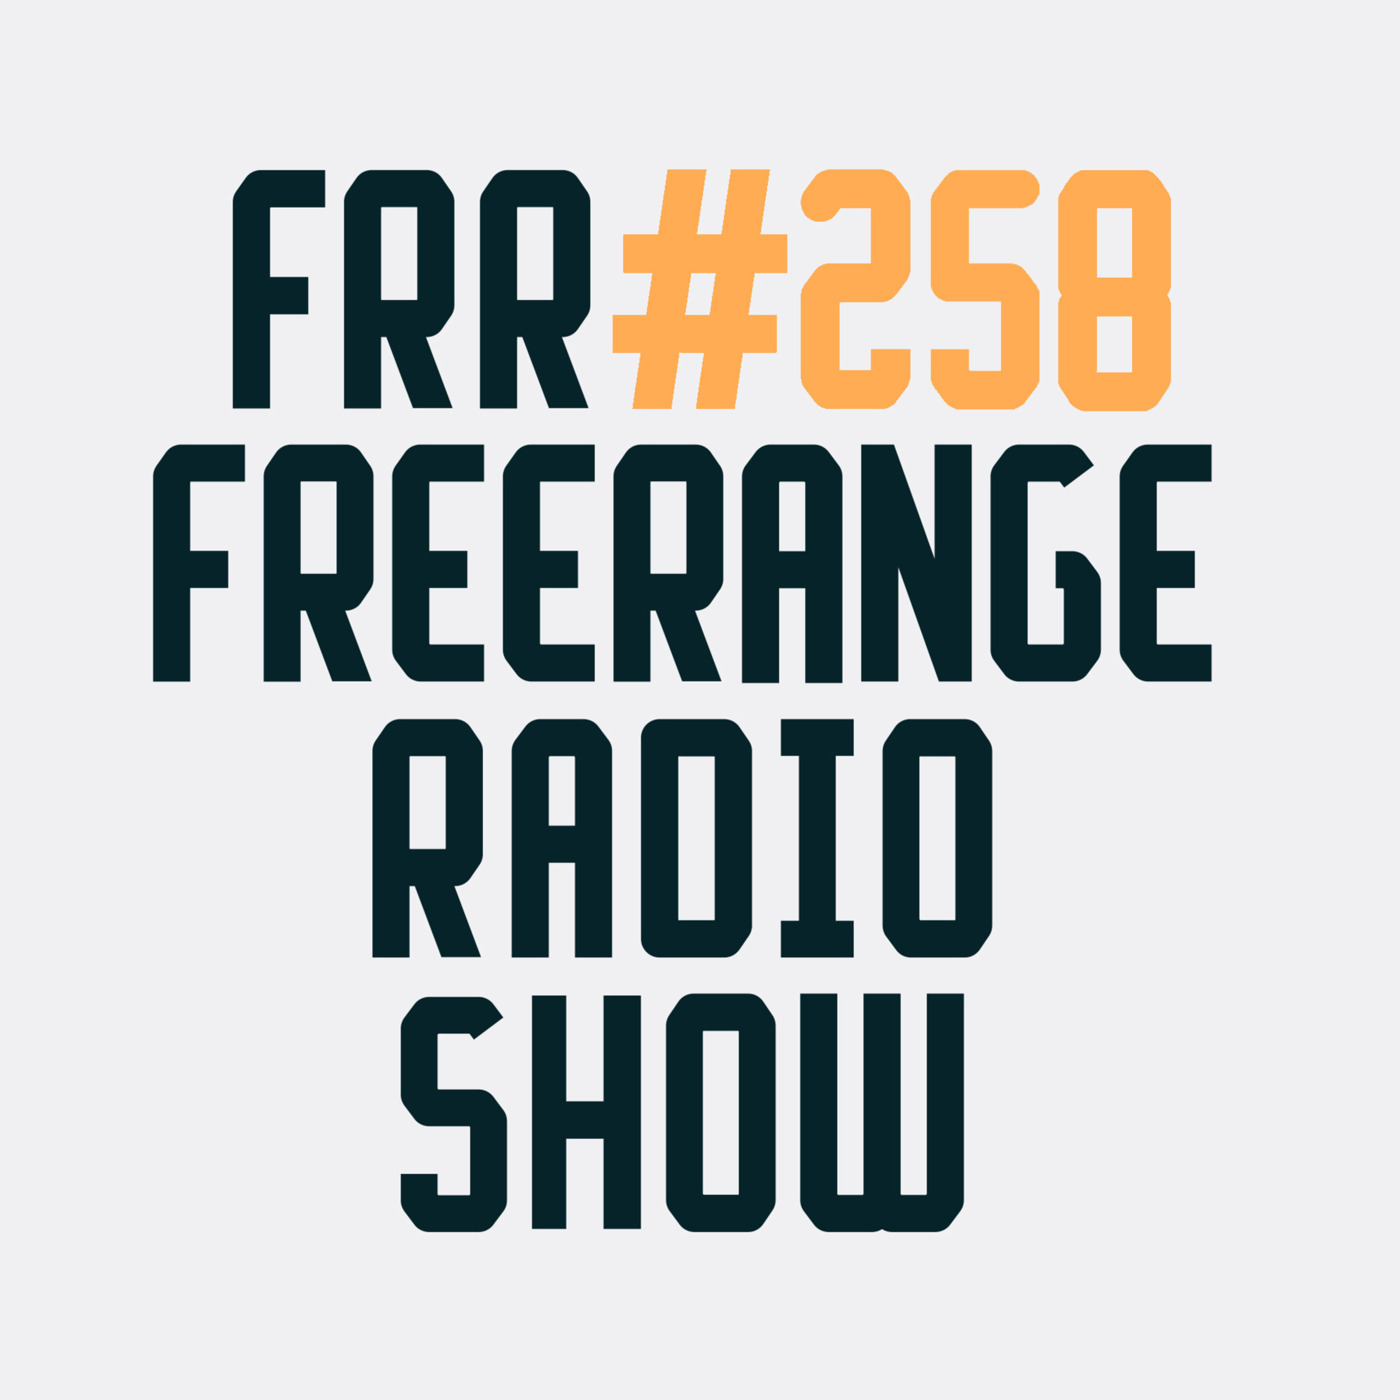 Episode 258: Freerange Records Radioshow No.258 - March 2023 With Matt Masters